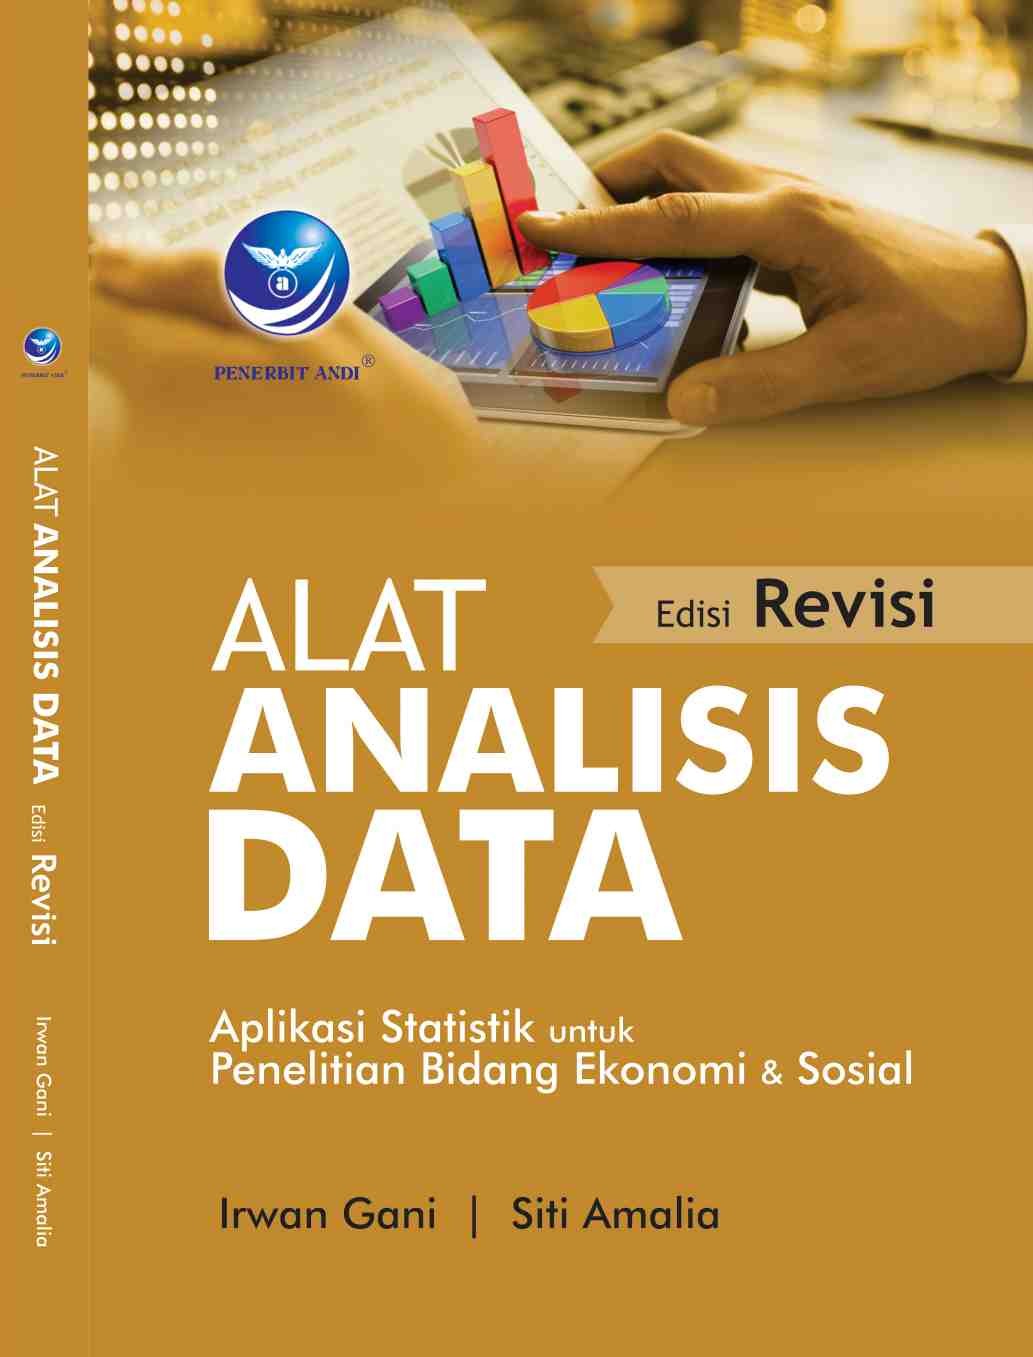 Alat Analisis Data : edisi revisi